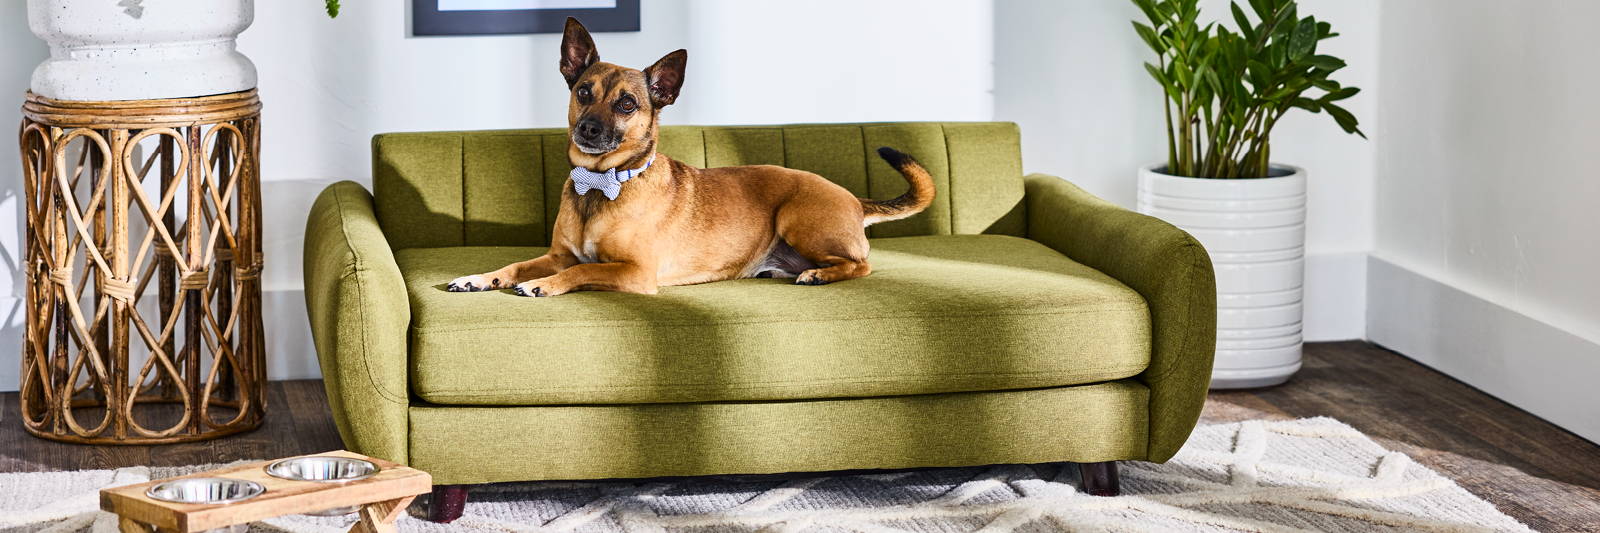 Pet Friendly Furniture Designing Your